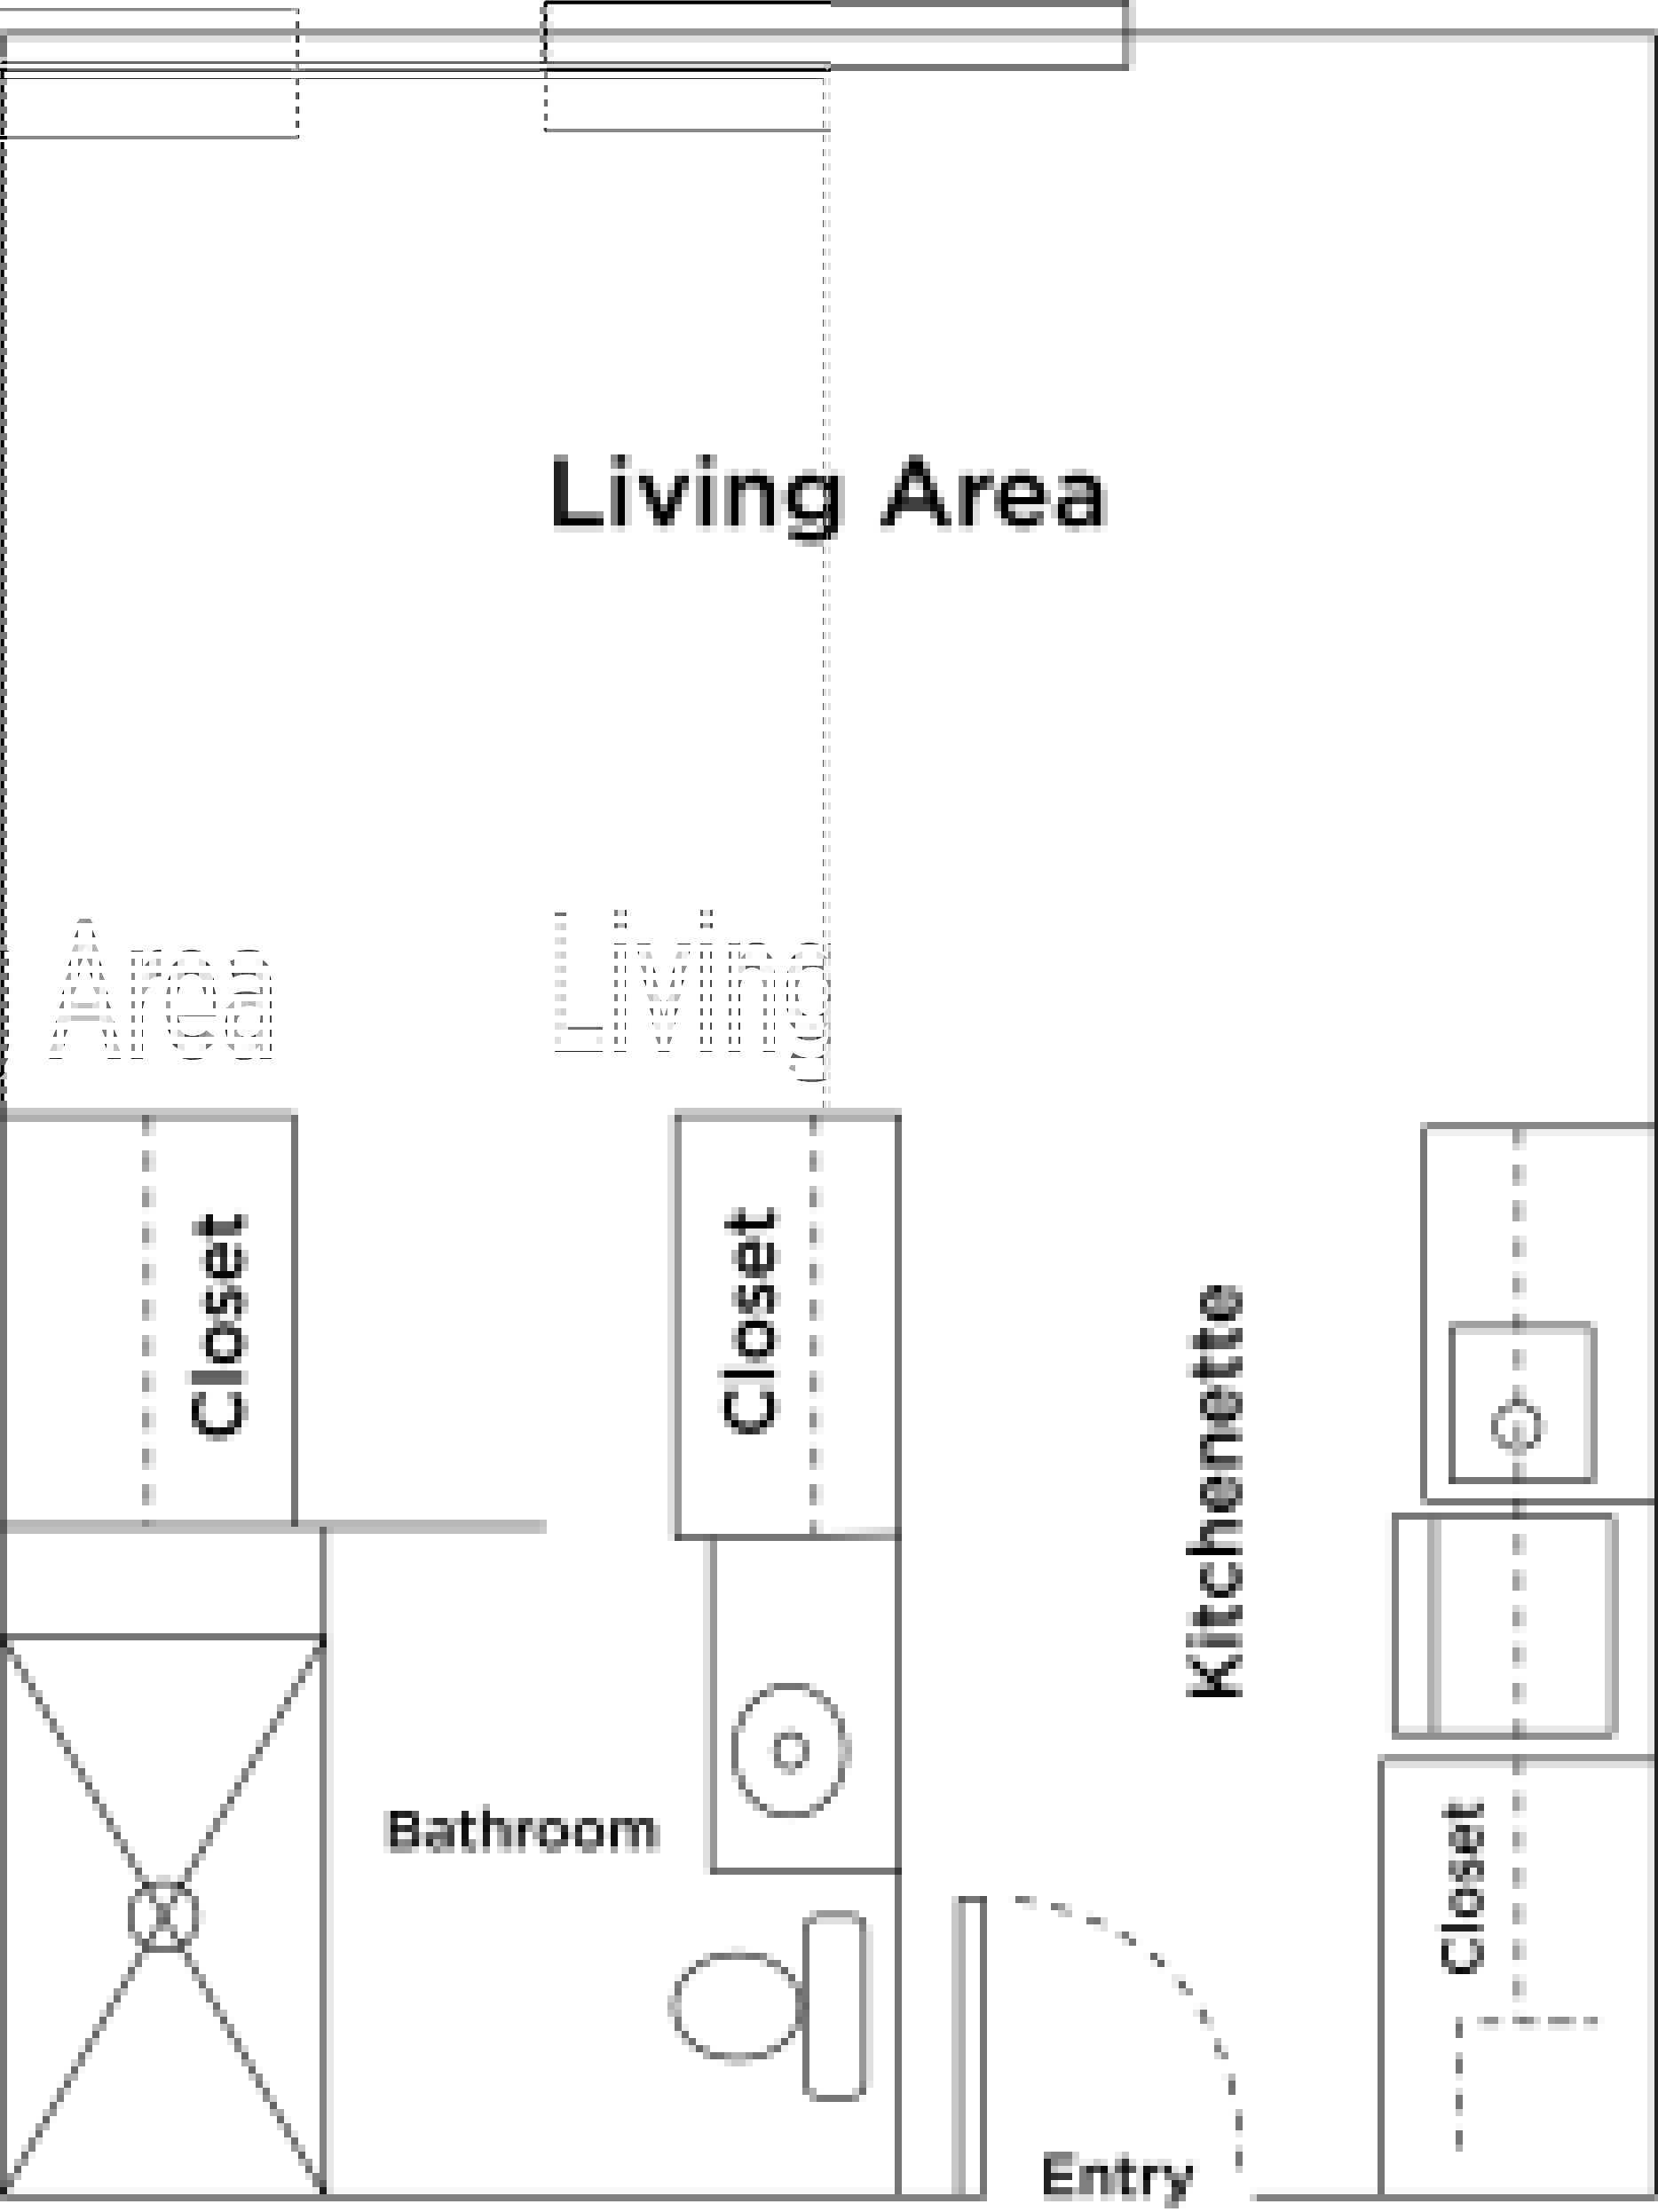 The Oaks_Assisted Living Studio floor plan